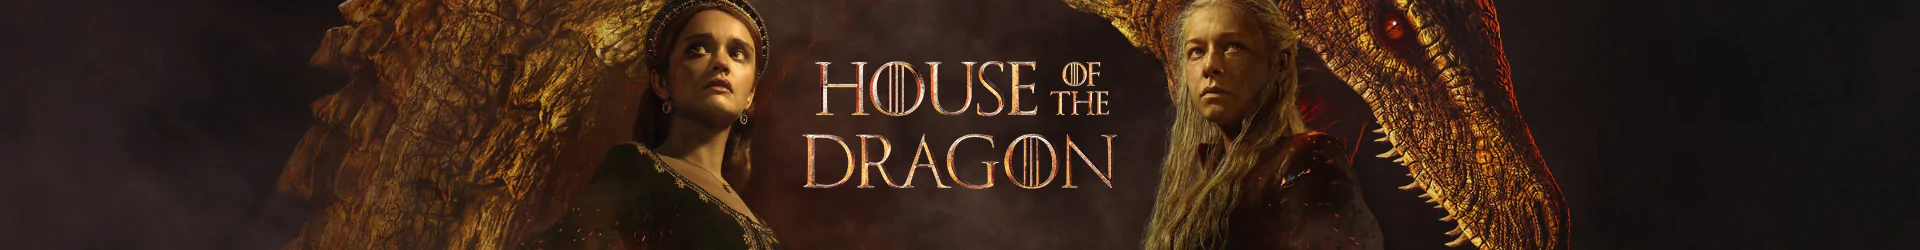 House of the Dragon mugs banner